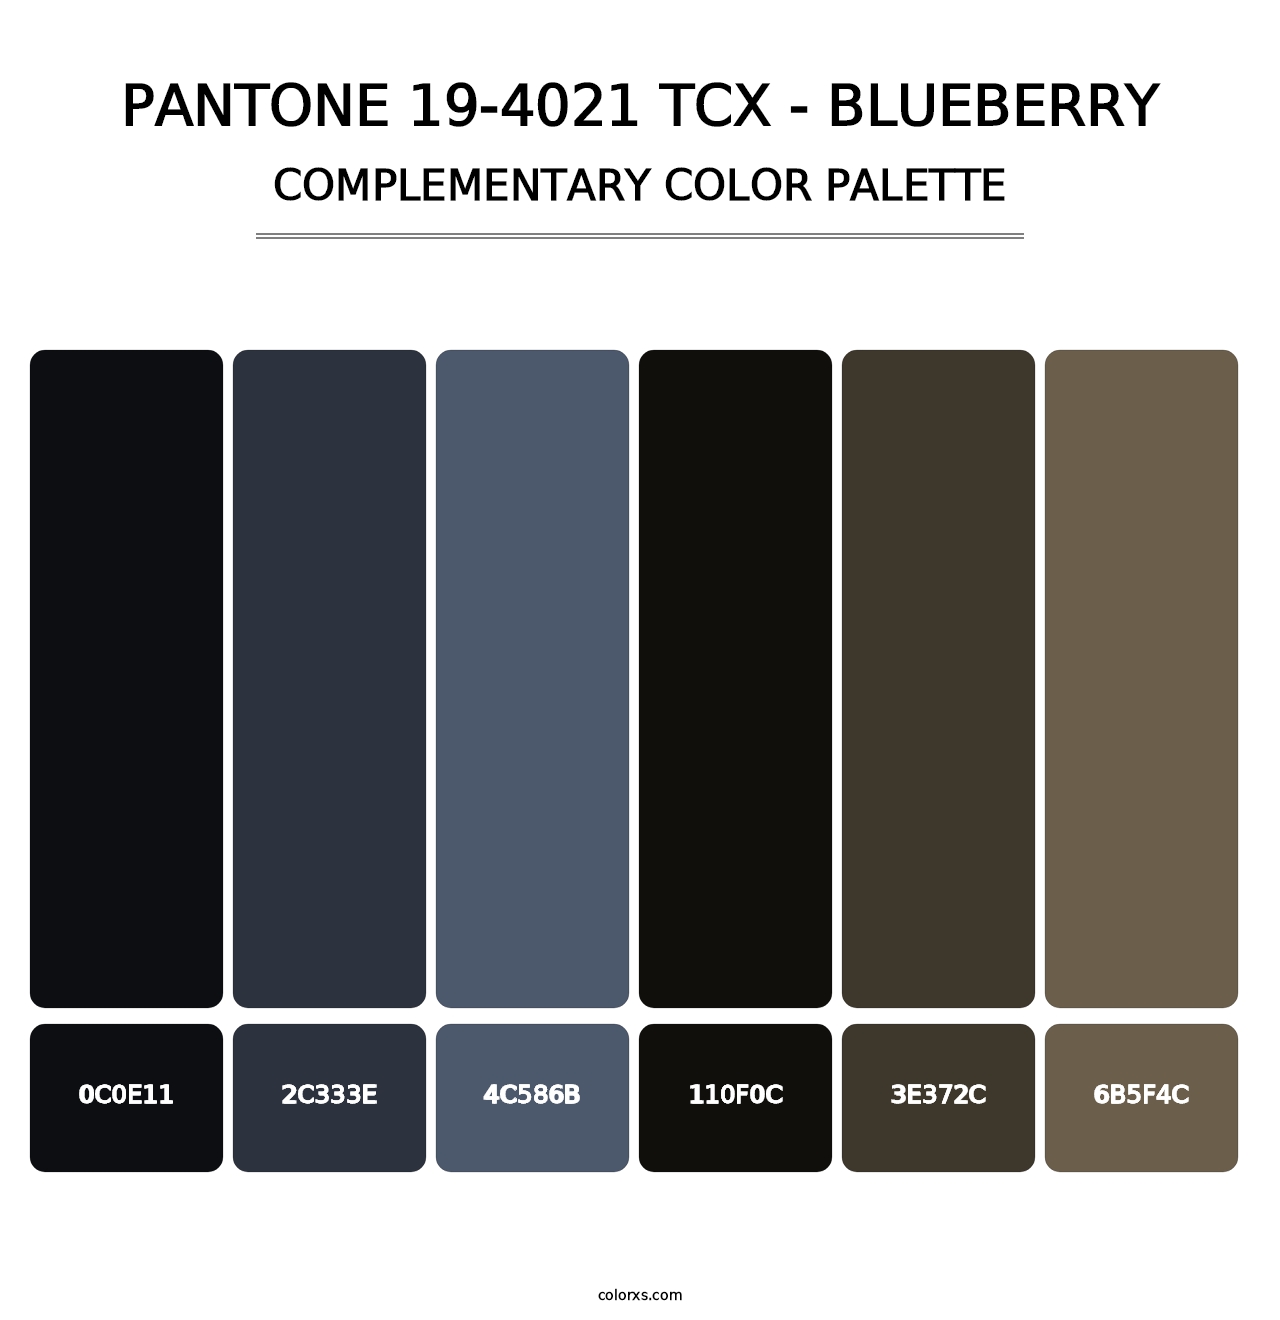 PANTONE 19-4021 TCX - Blueberry - Complementary Color Palette